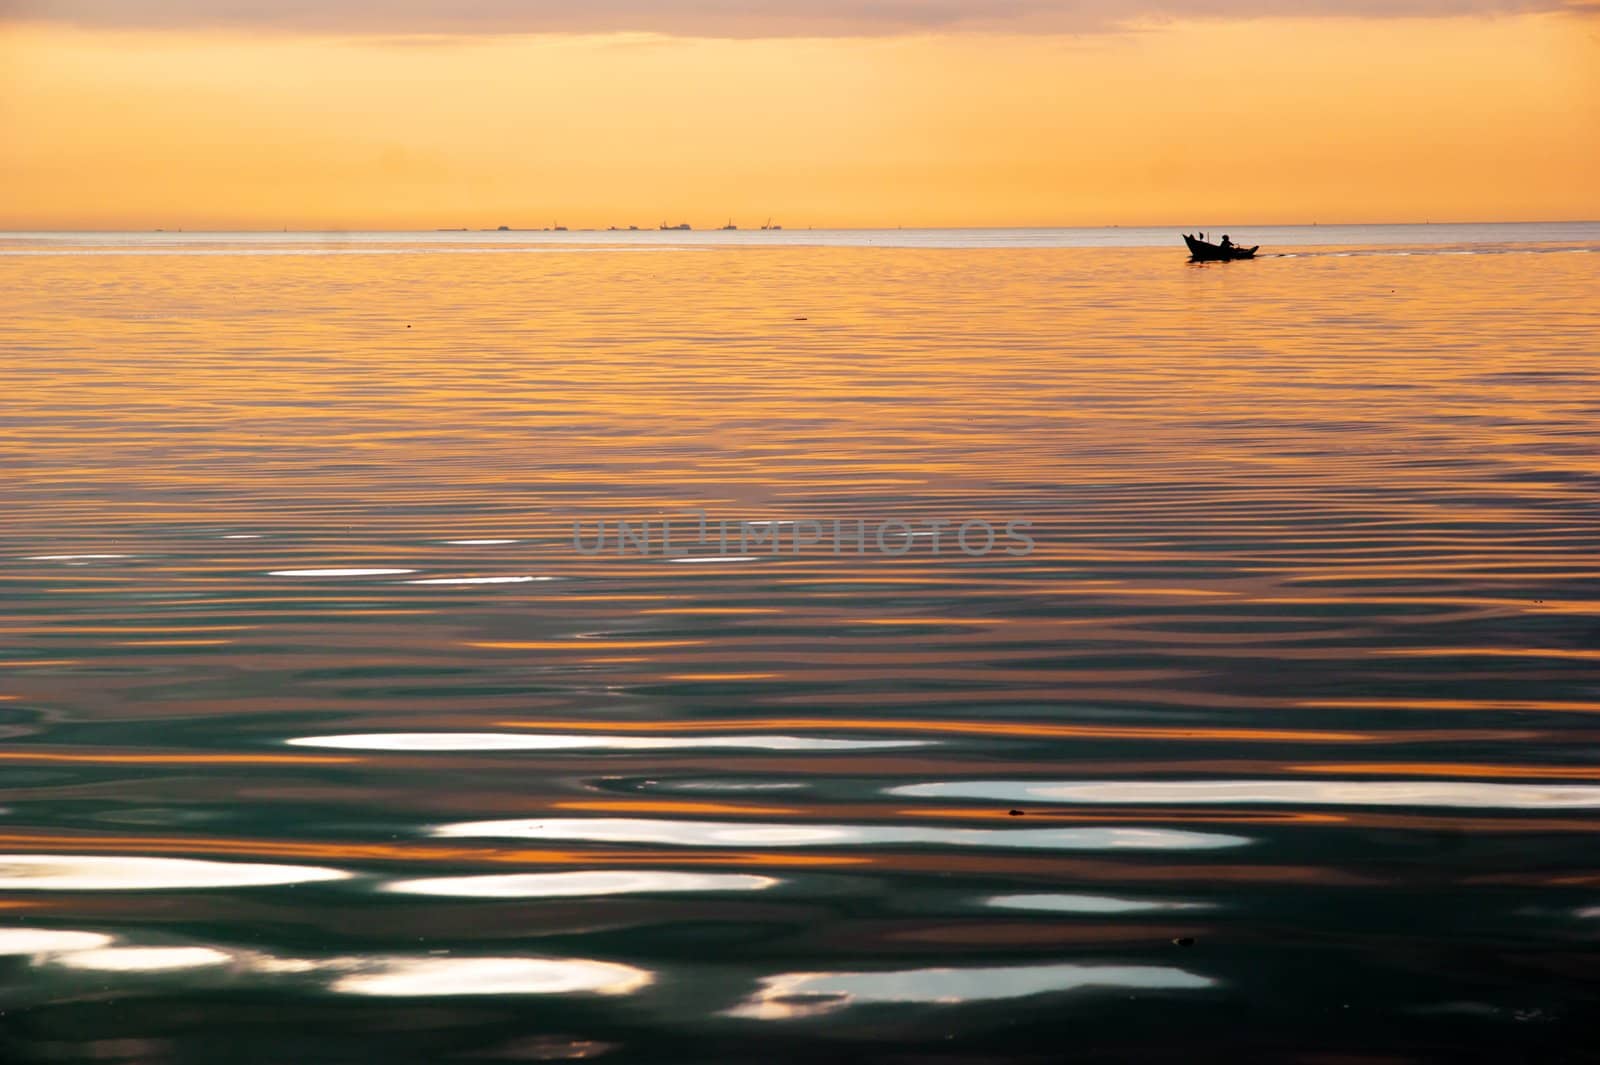 Haikou  Bay views, Hainan Island, China by xfdly5